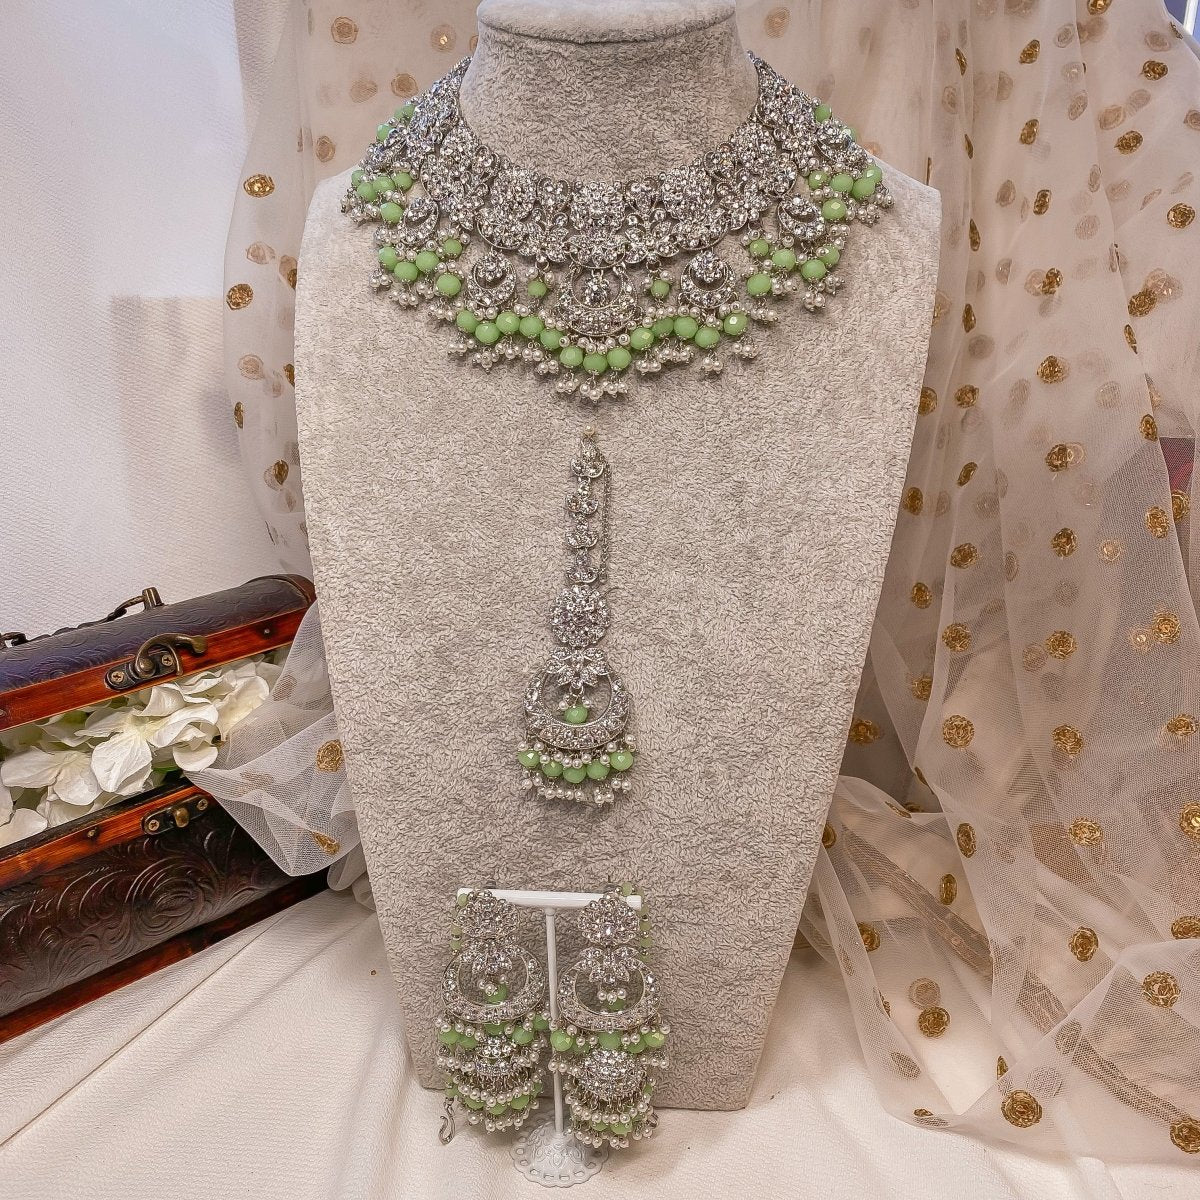 Husna Fashion Jewellery Wedding American Diamond Light Pink Necklace Set  for Women